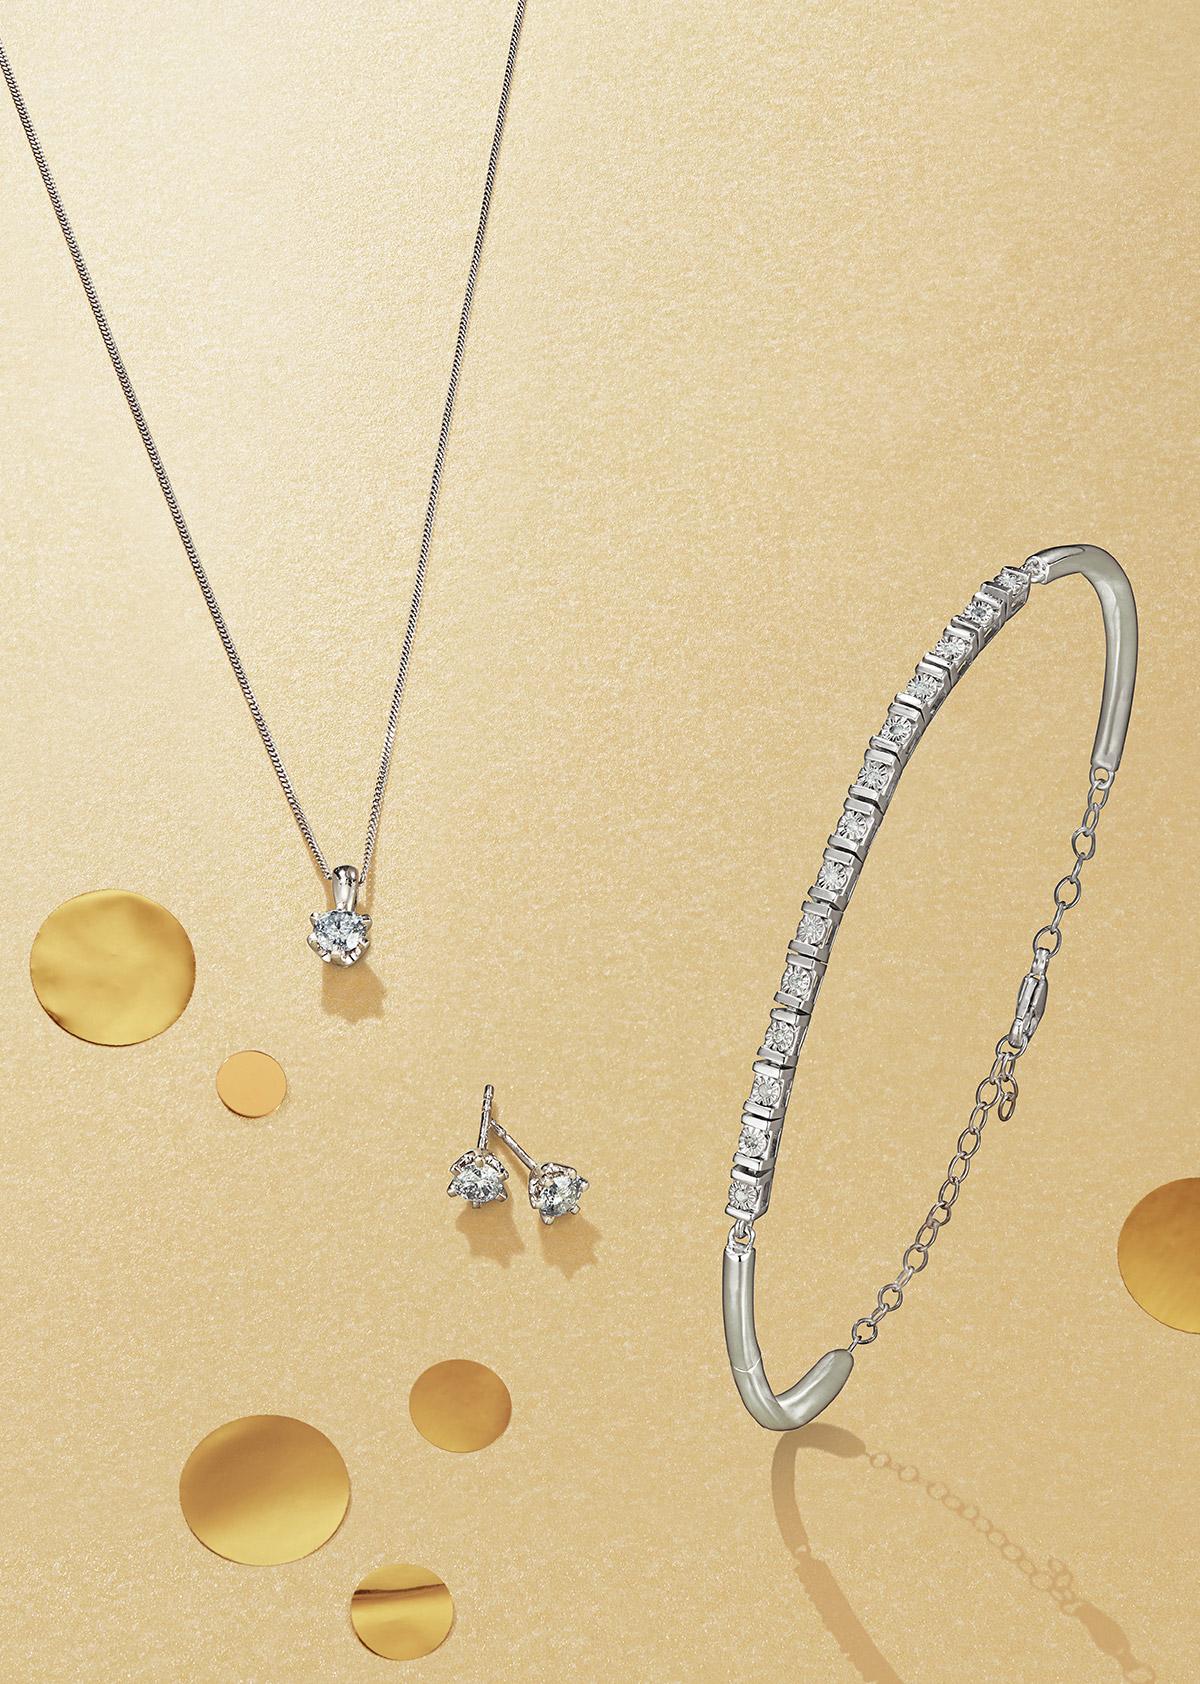 Diamond necklace, earrings and bracelet